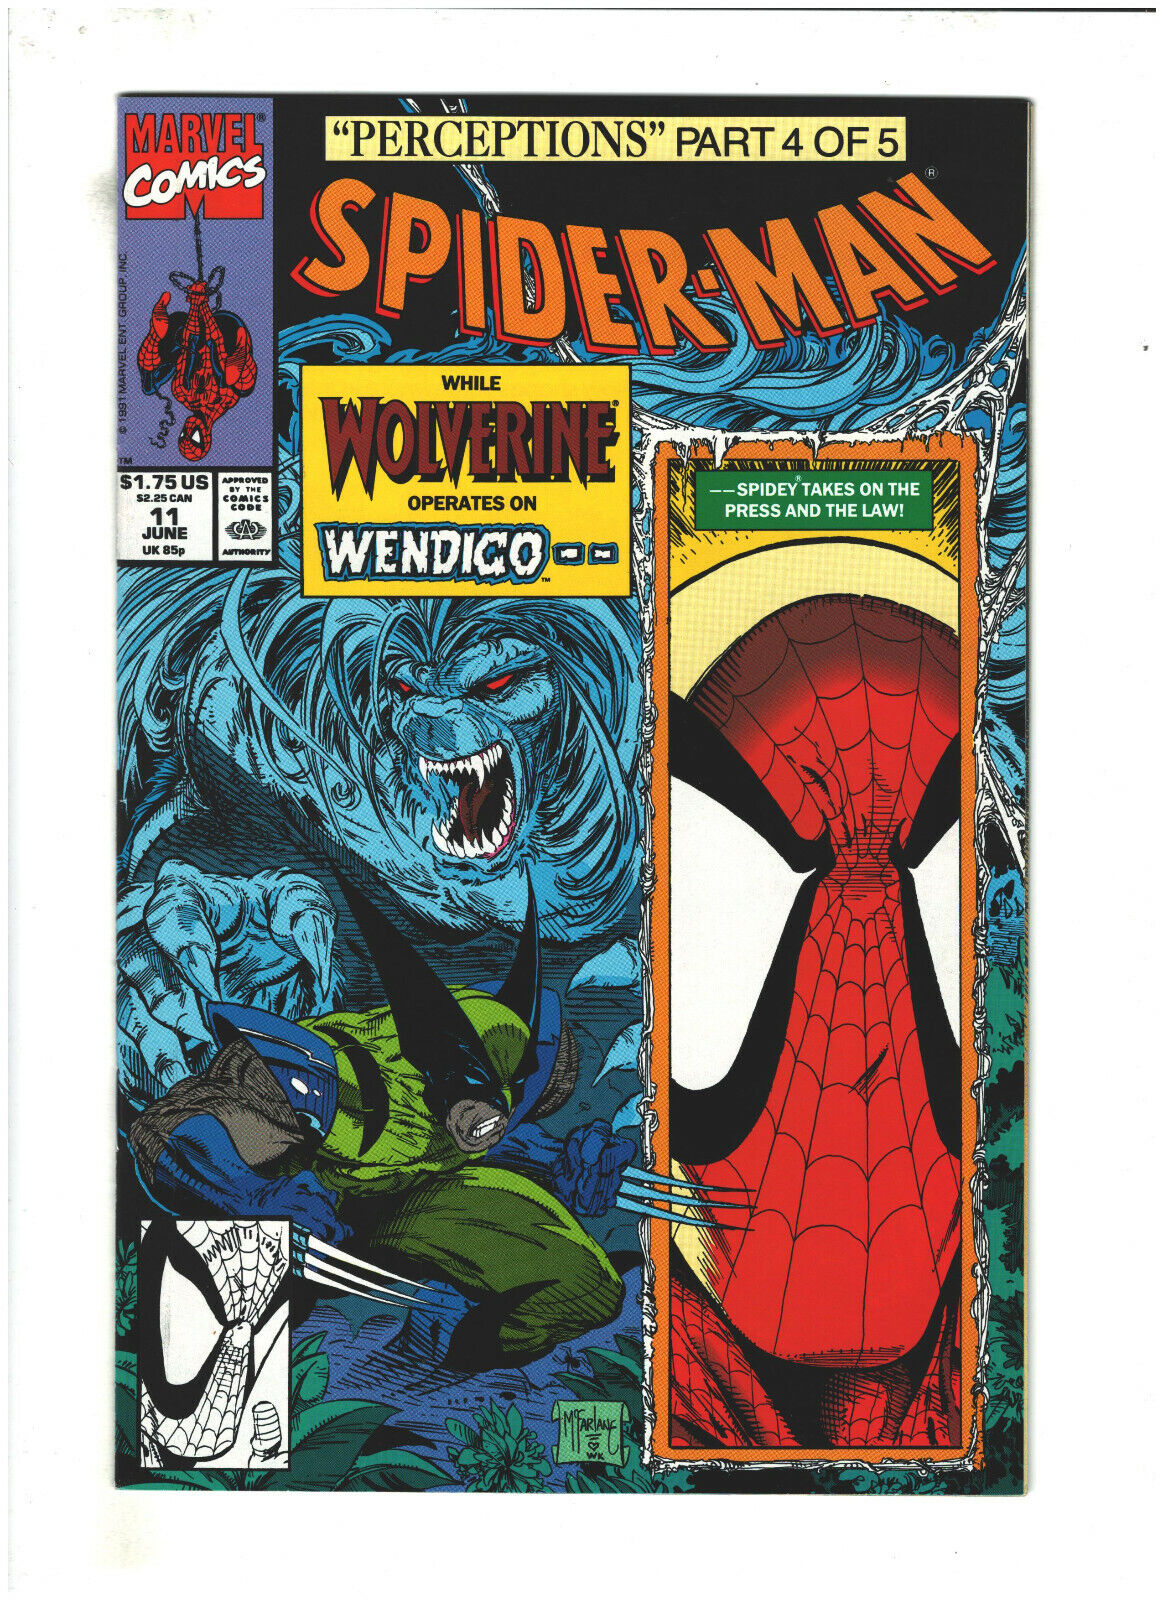 Spider-man #11 VF/NM 9.0 Marvel Comics 1991 Todd McFarlane,Perceptions,Wolverine